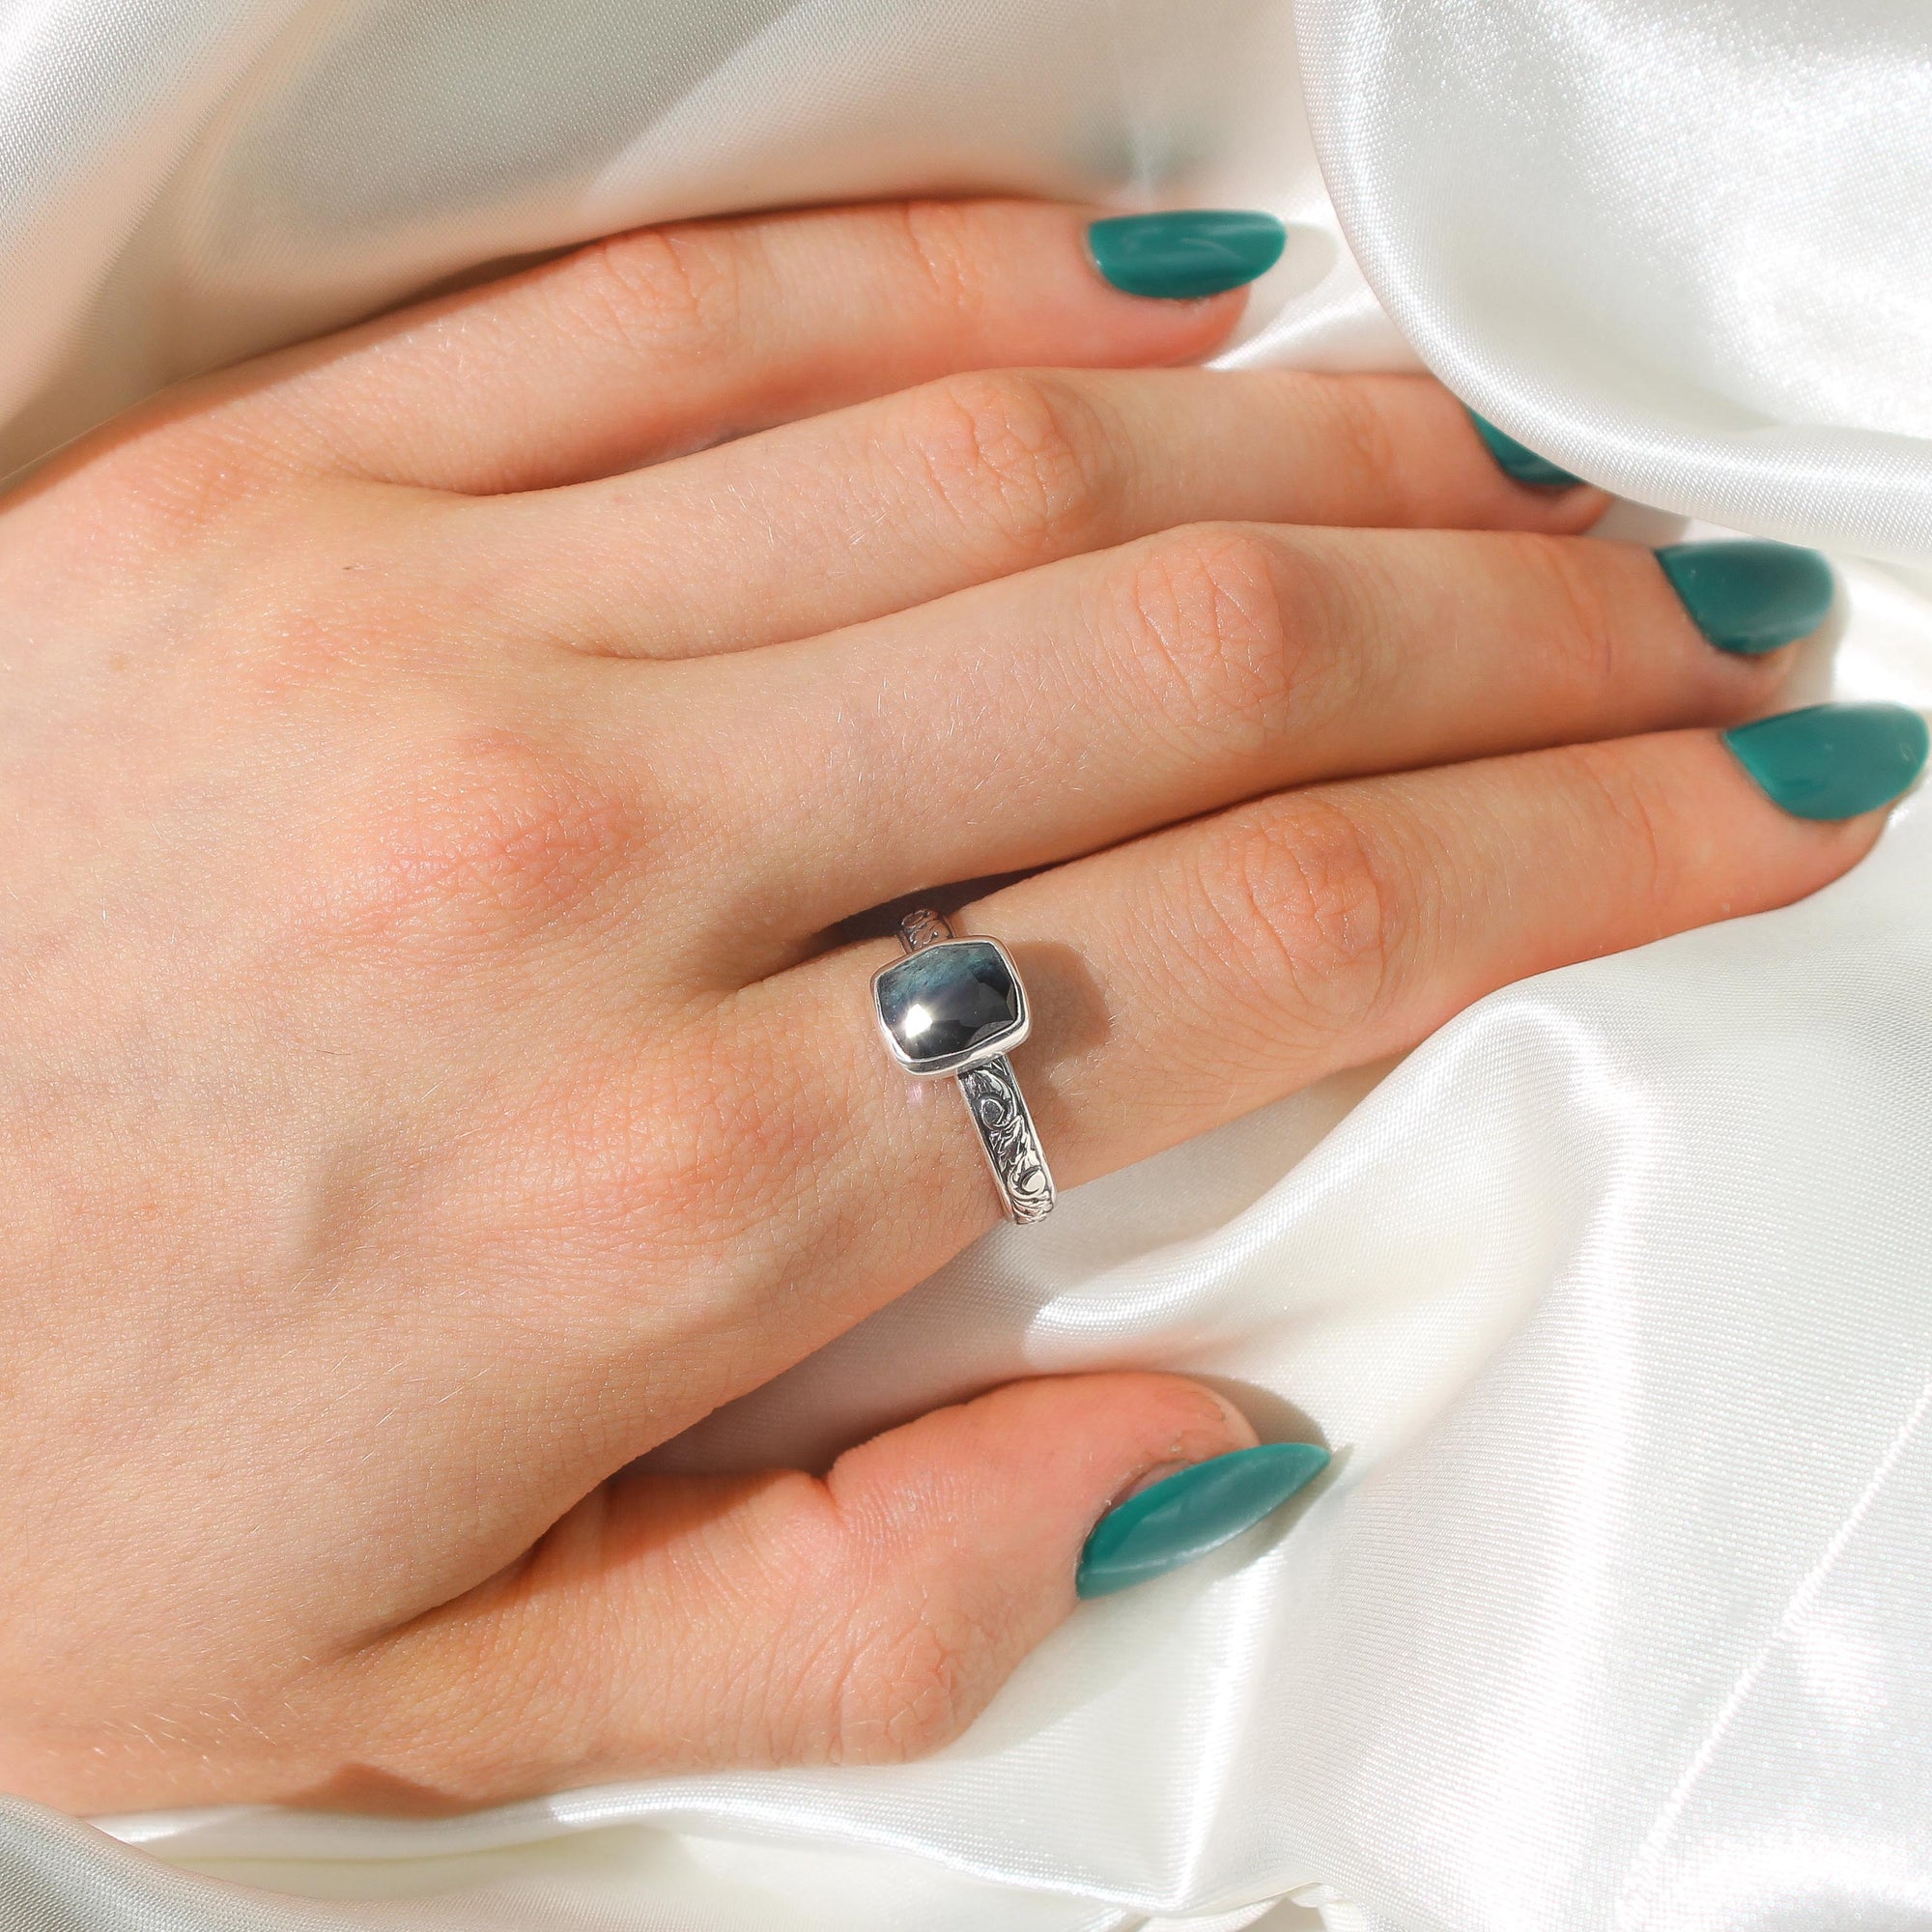 Blue Bi-Color Tourmaline Ring - Size 8.5